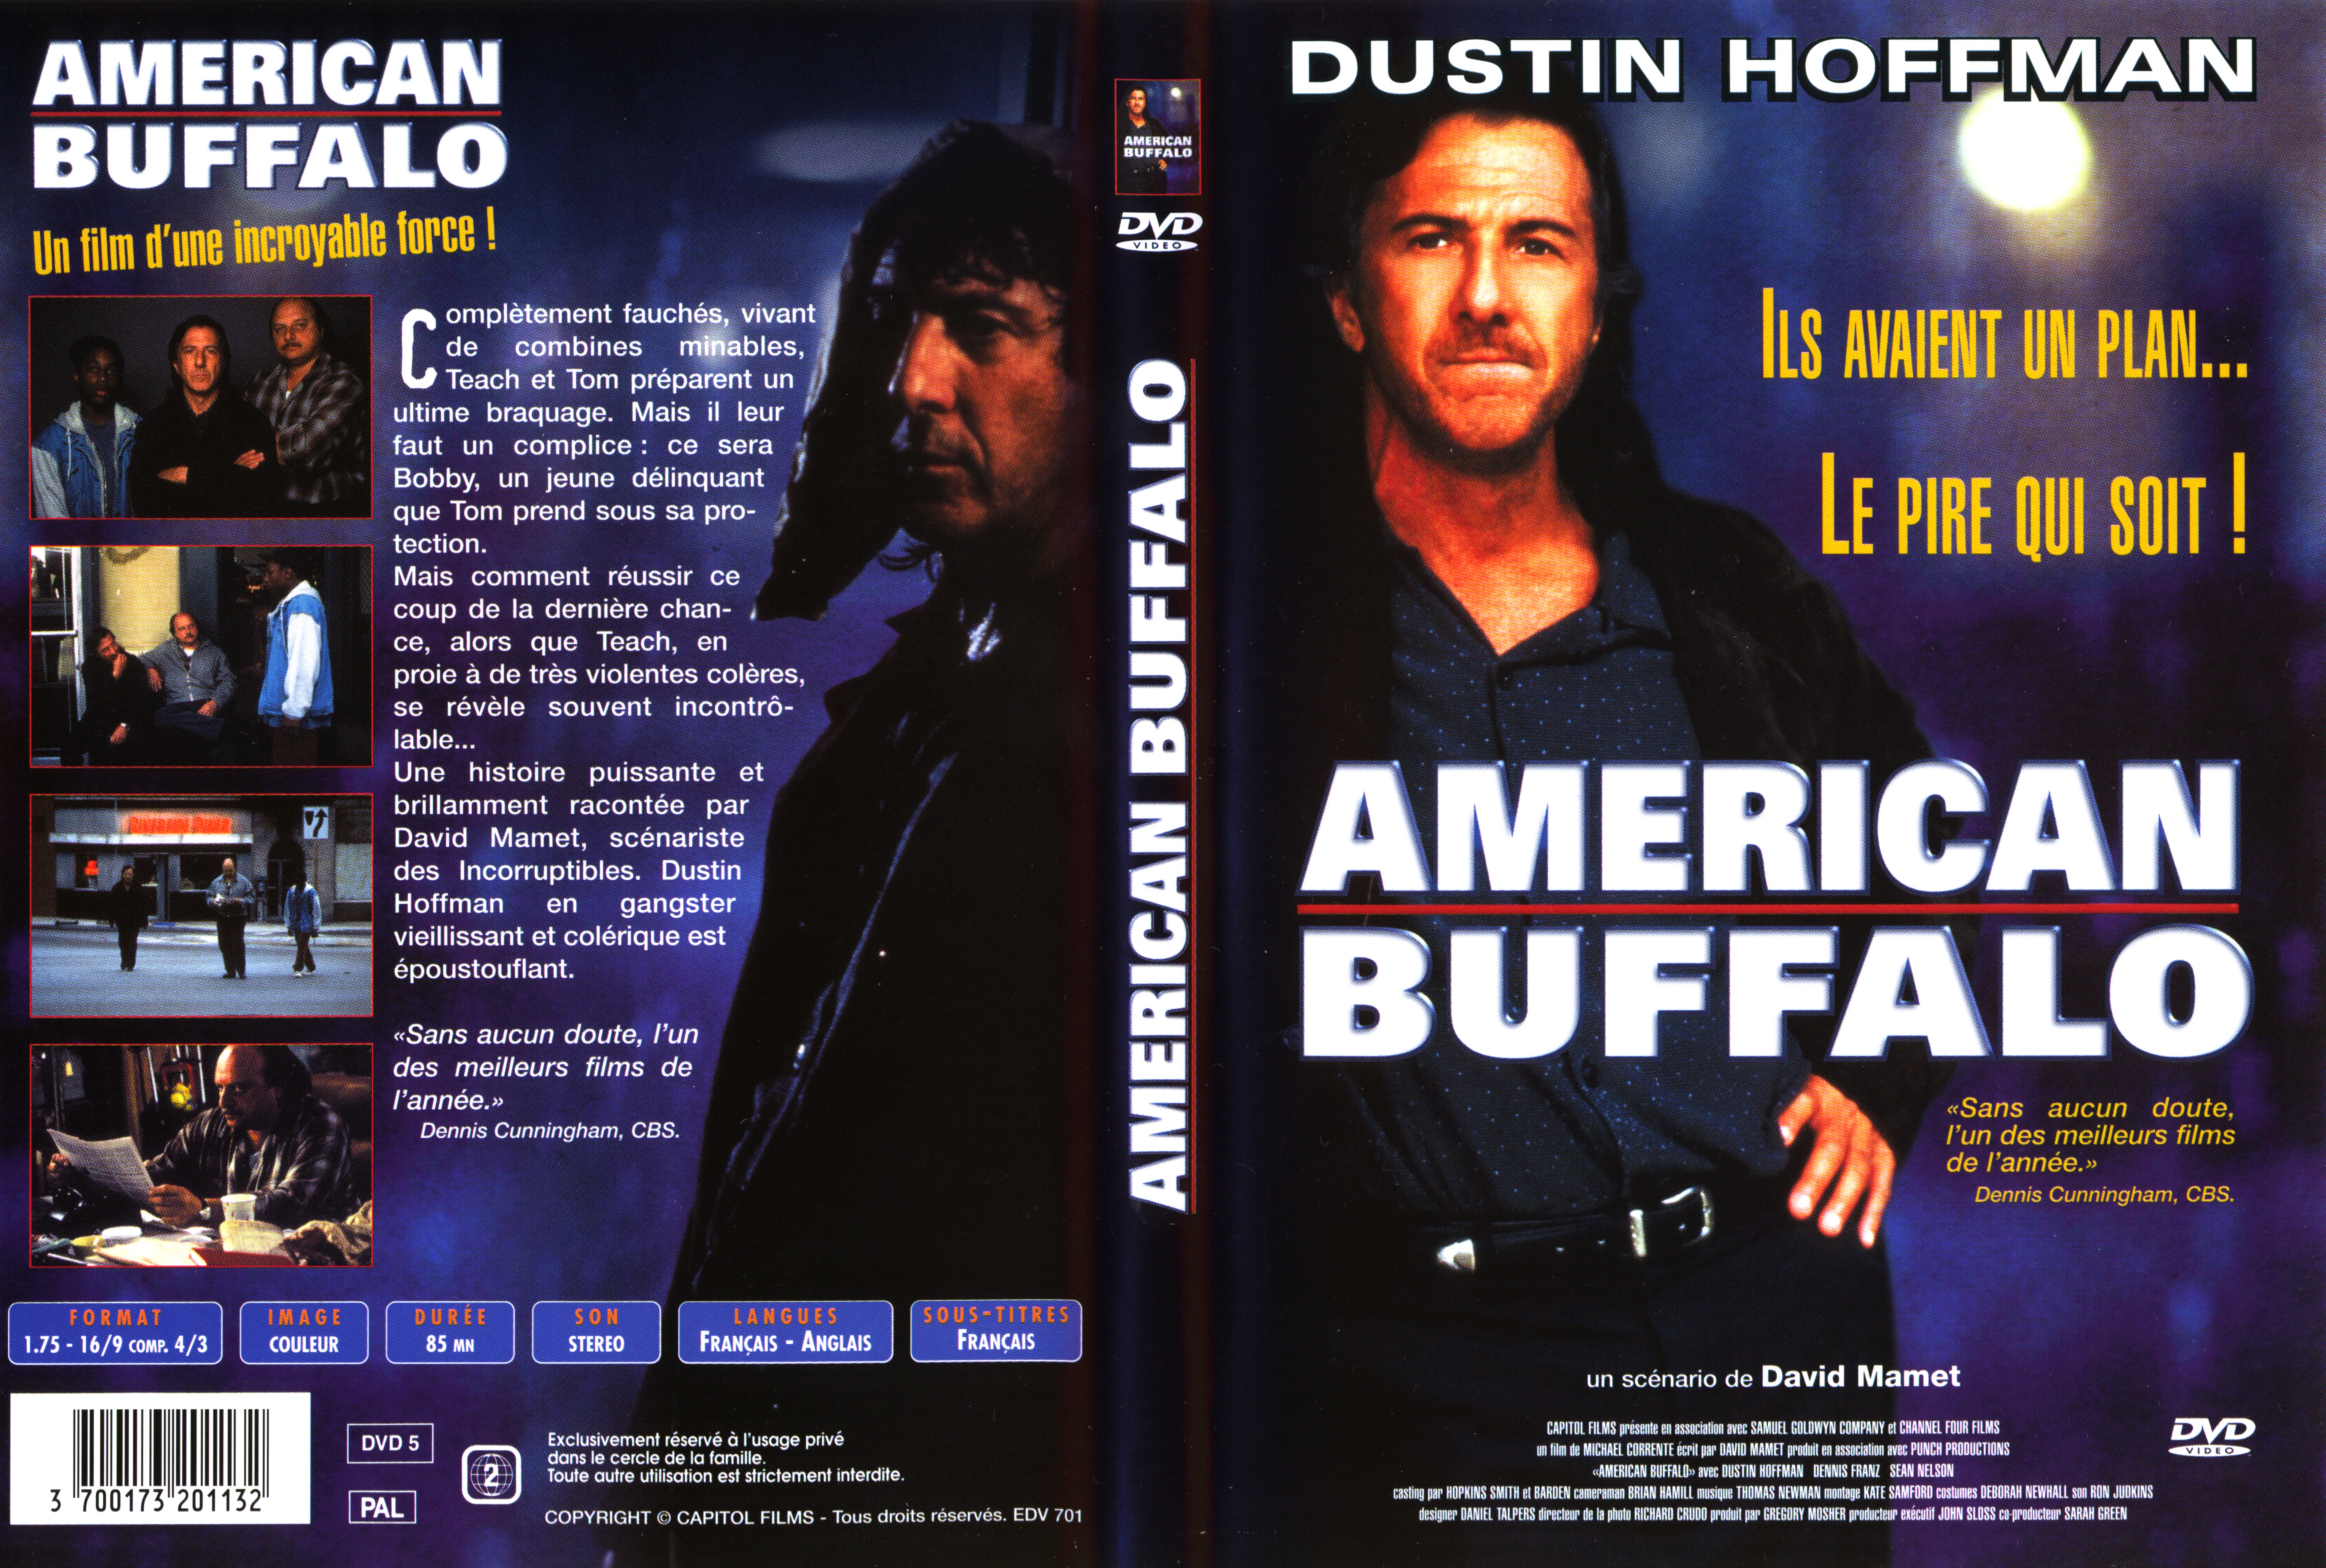 Jaquette DVD American buffalo v2